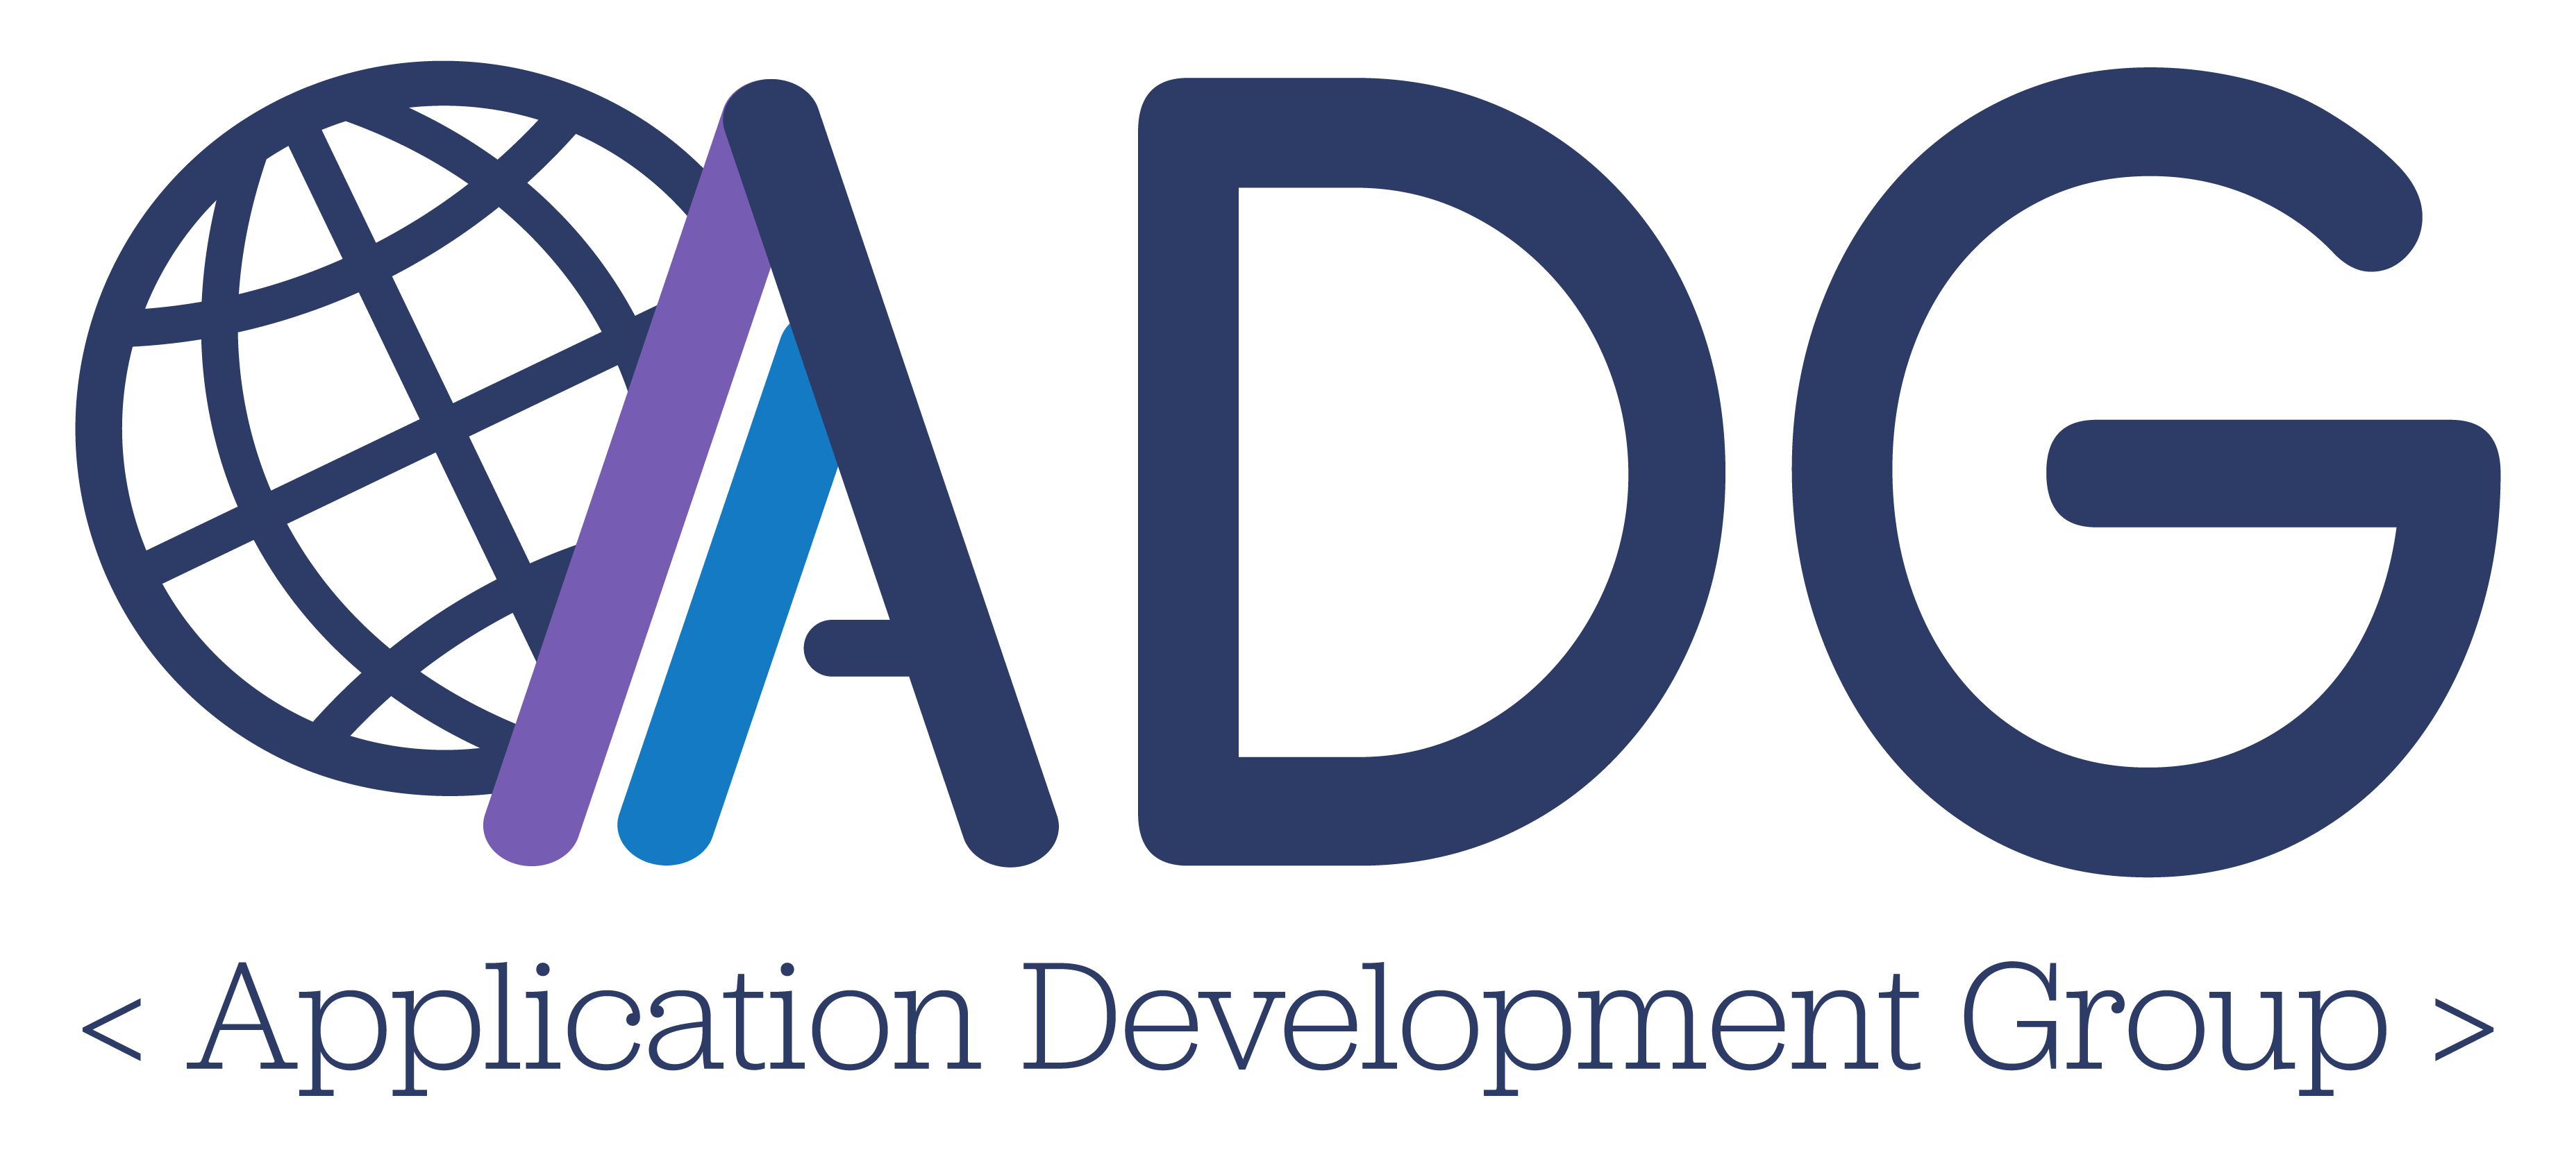 ADG-logos-main.png